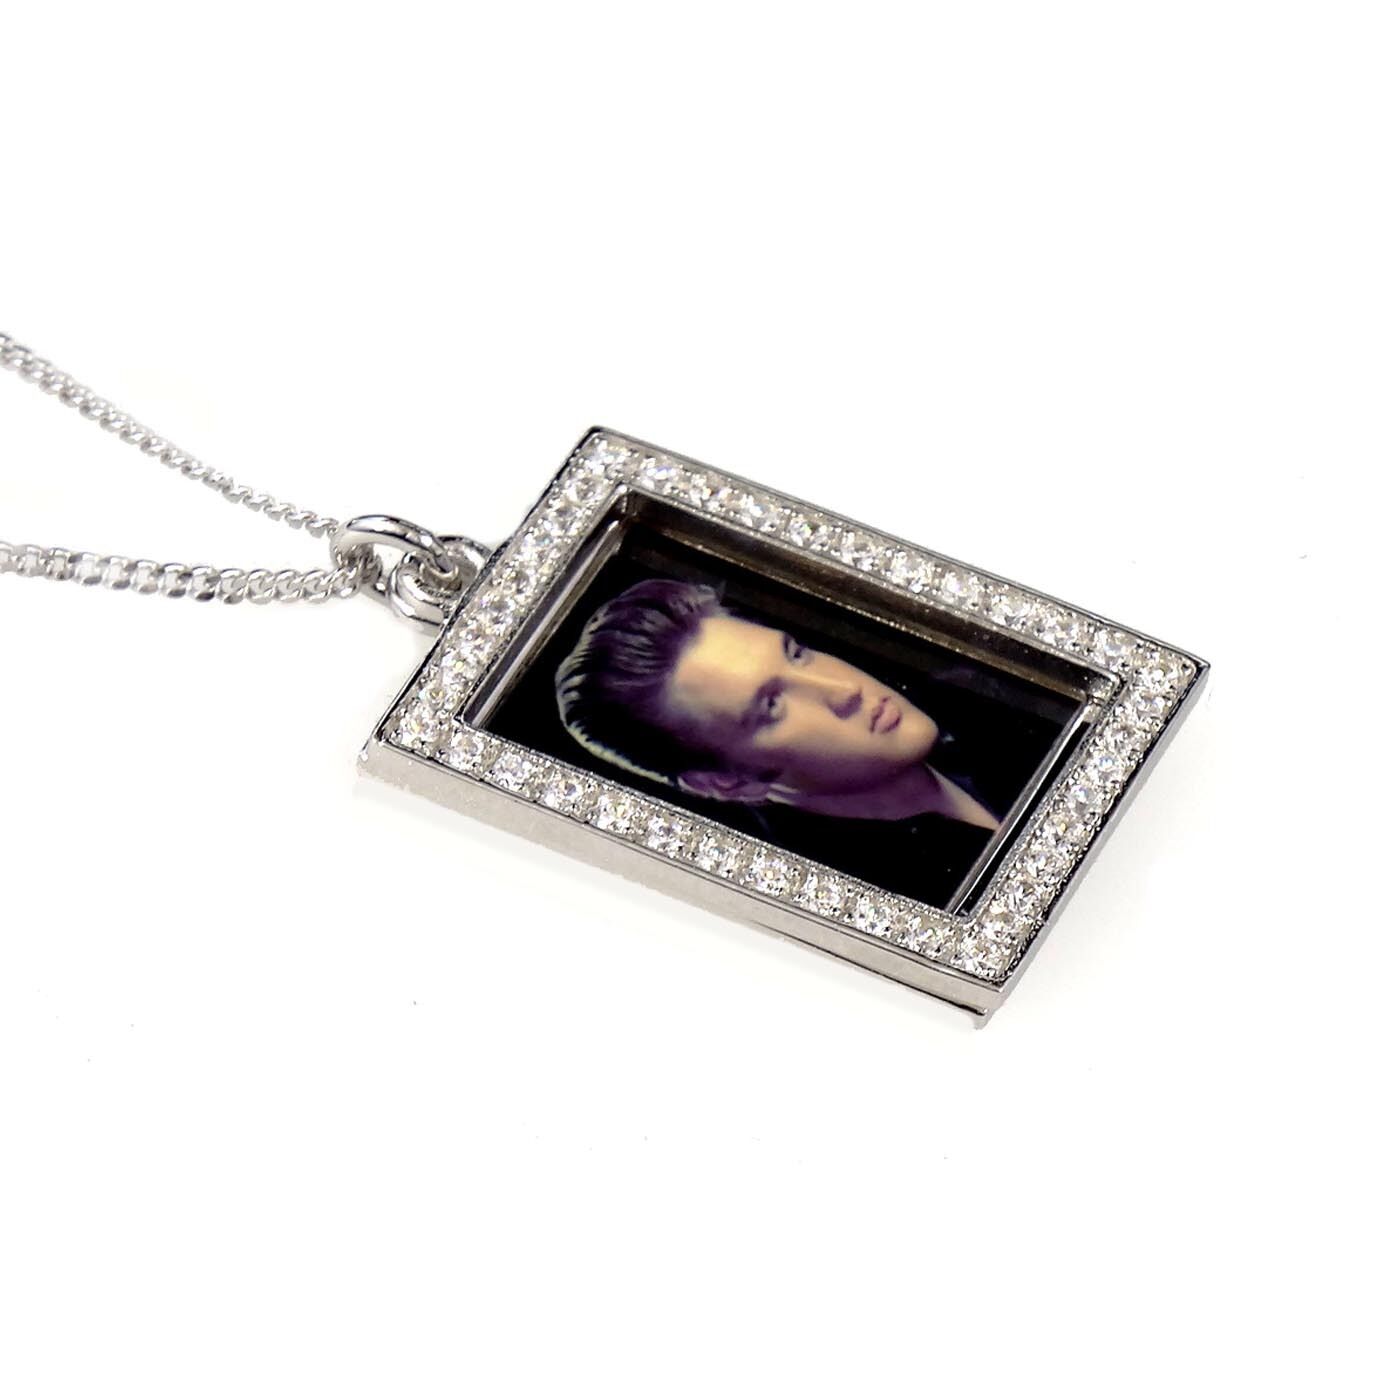 Elvis Presley Photograph Pendant - Hallmarked Silver with Swarovski Crystals